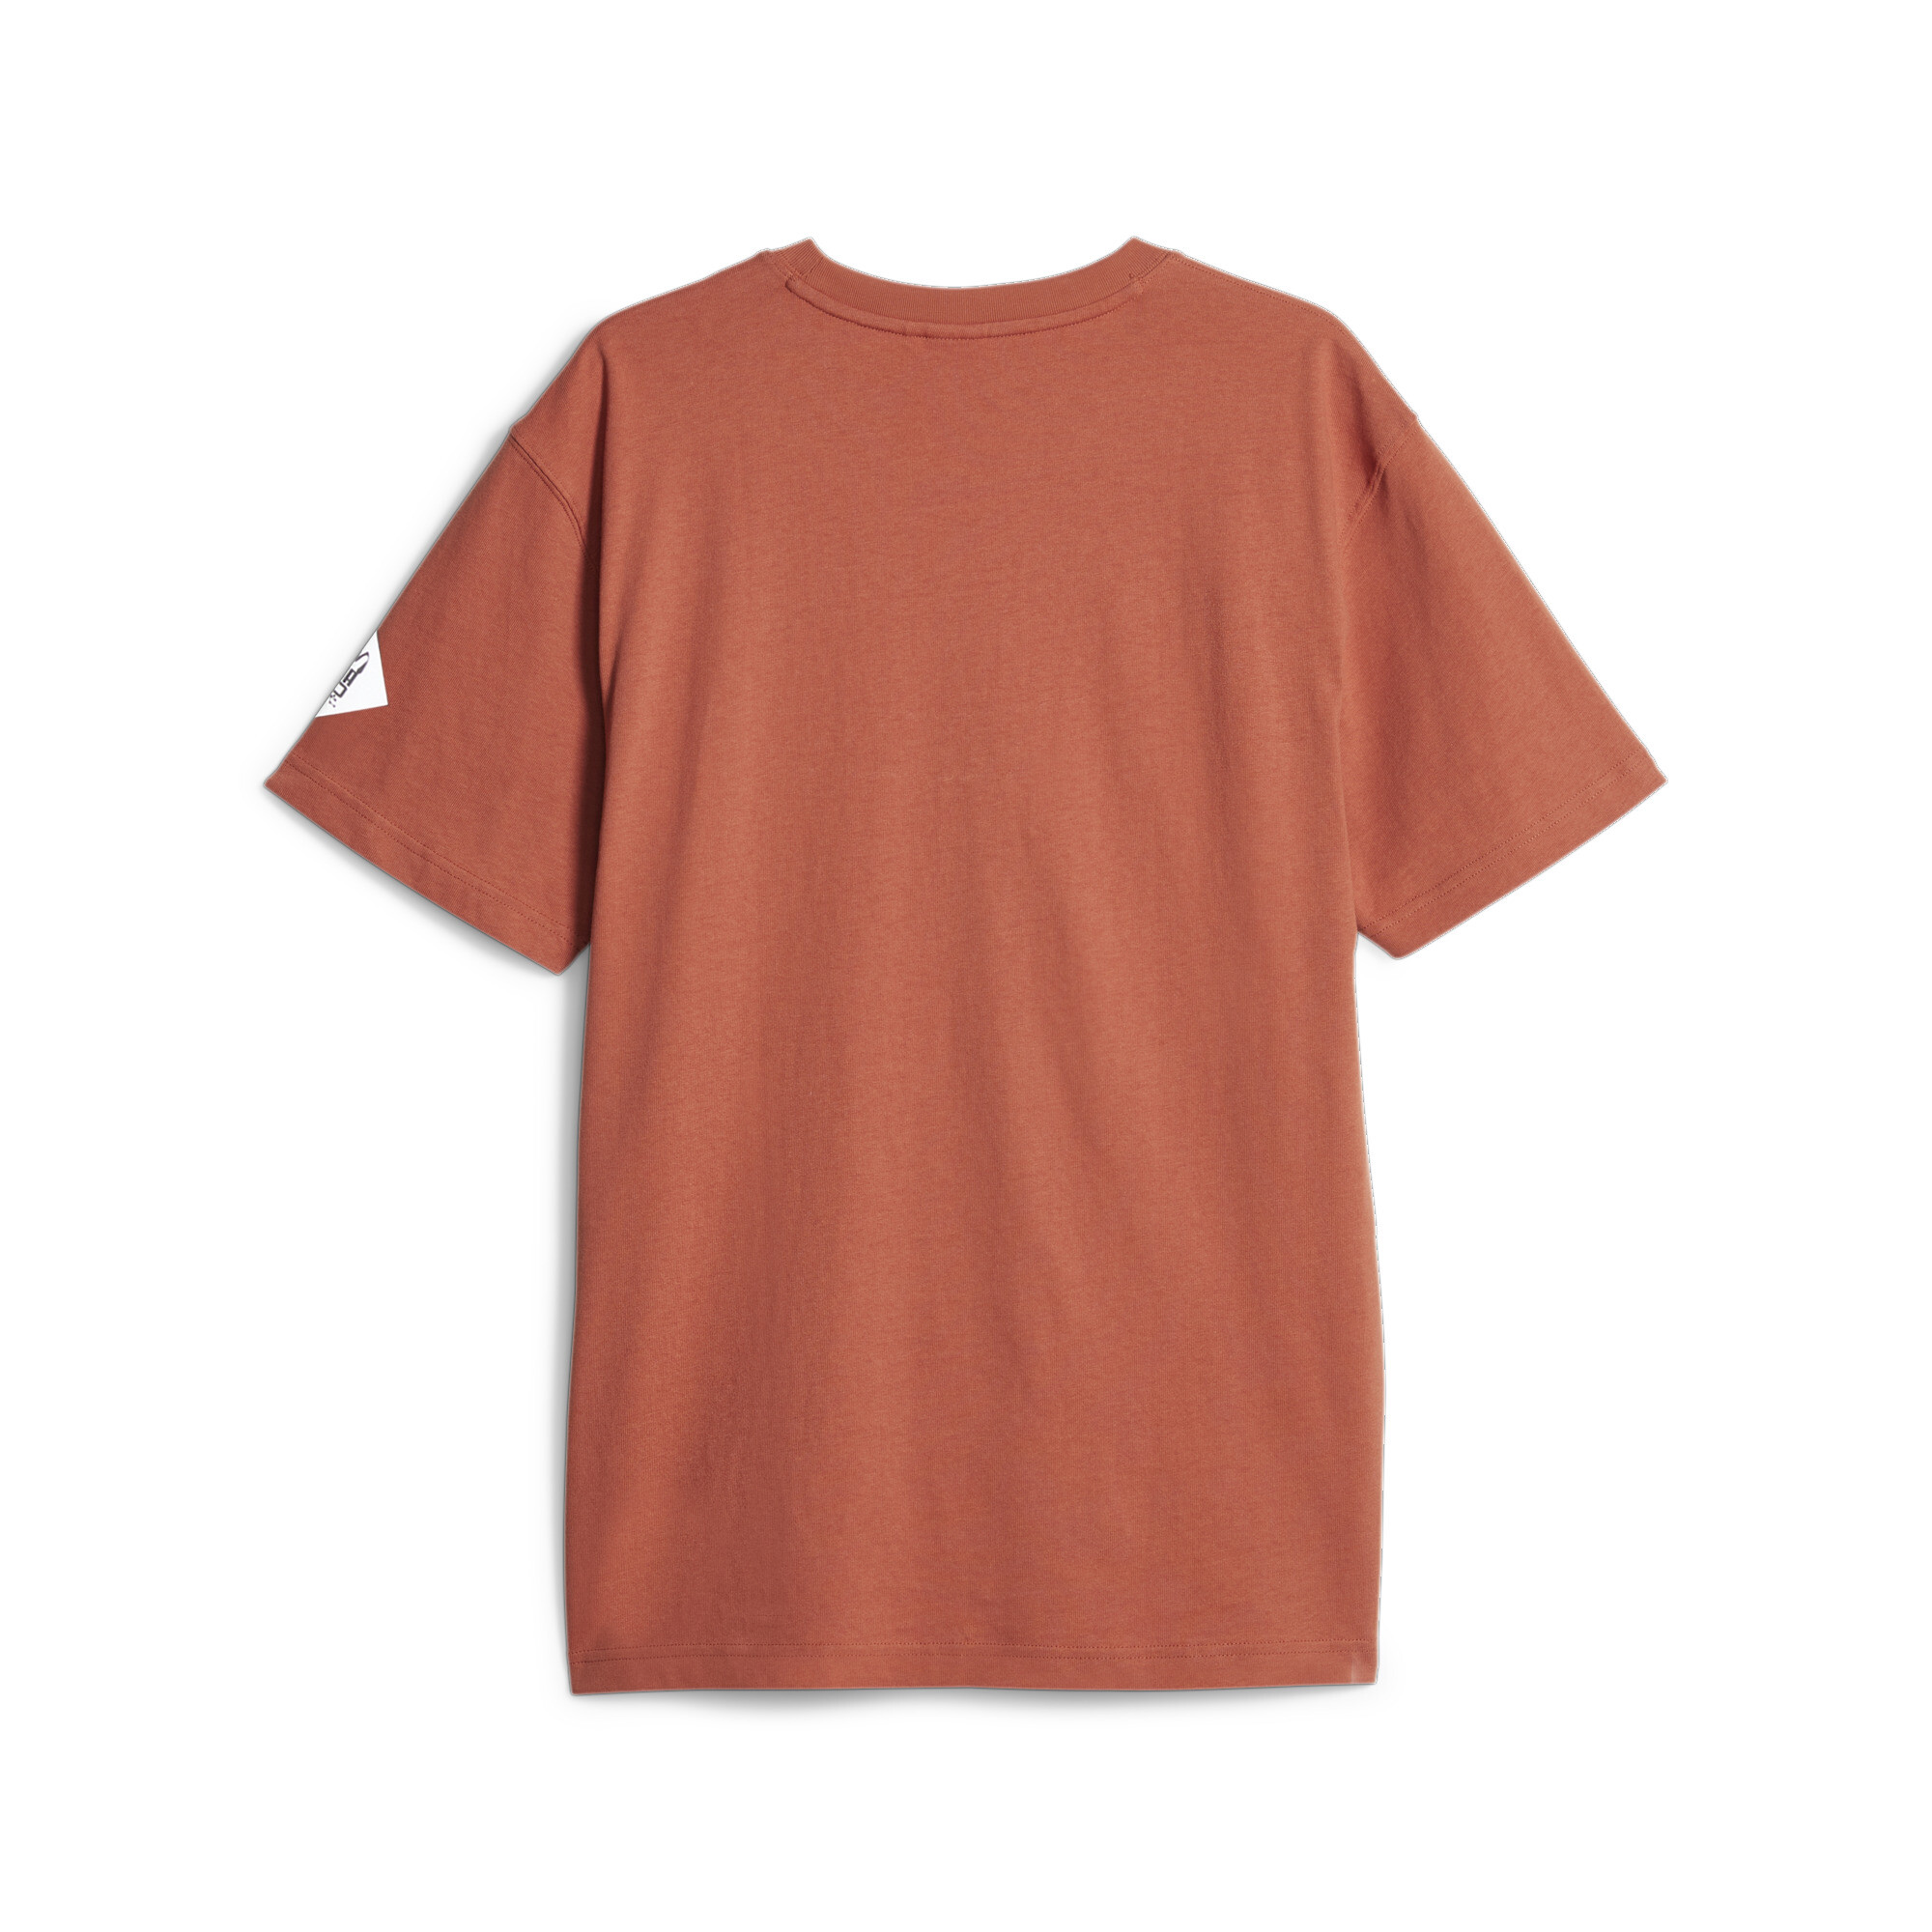 Men's PUMA X PERKS AND MINI Graphic T-Shirt In Brown, Size Medium